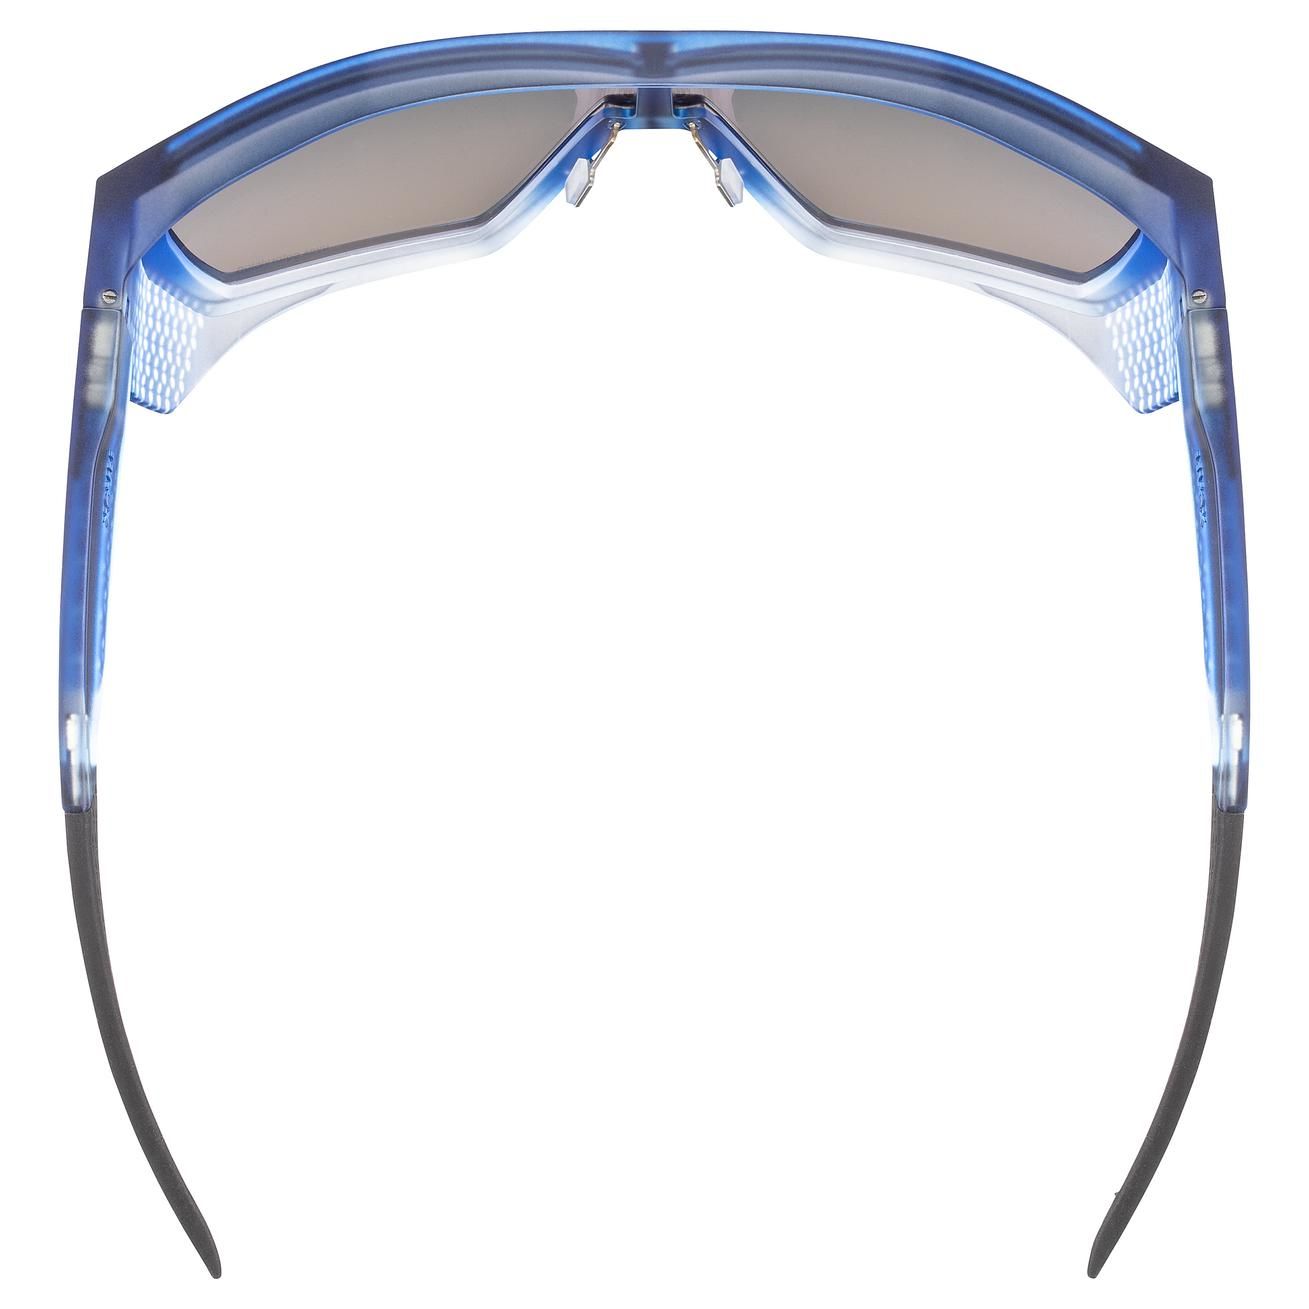 slnečné okuliare uvex mtn style CV blue mat fade s3